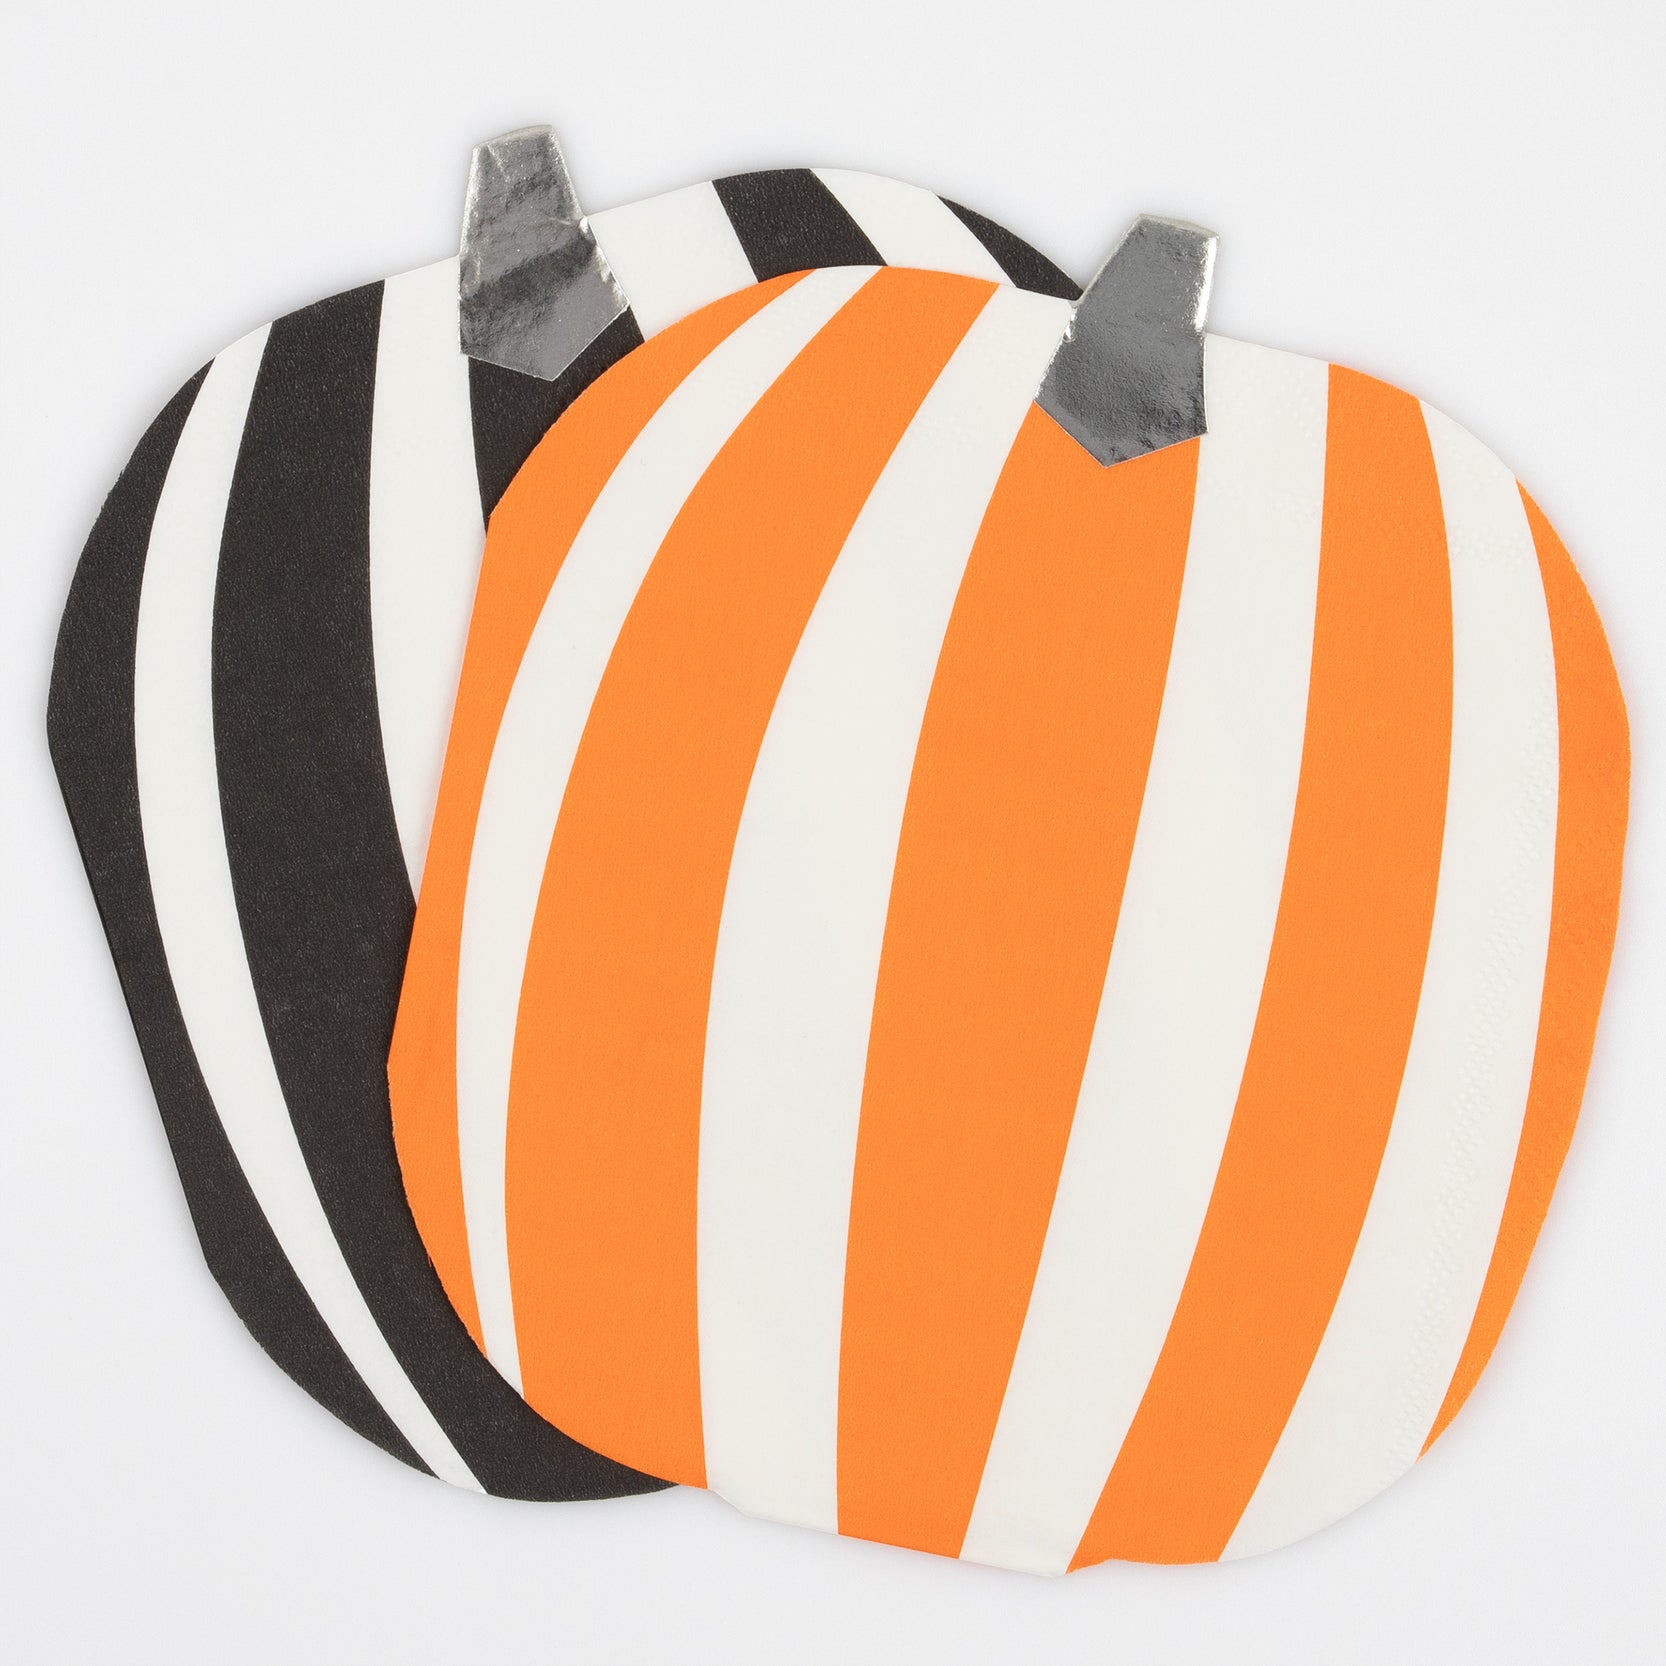 Two Mod Pumpkin Napkins, one black and white stripe, one orange and white stripe